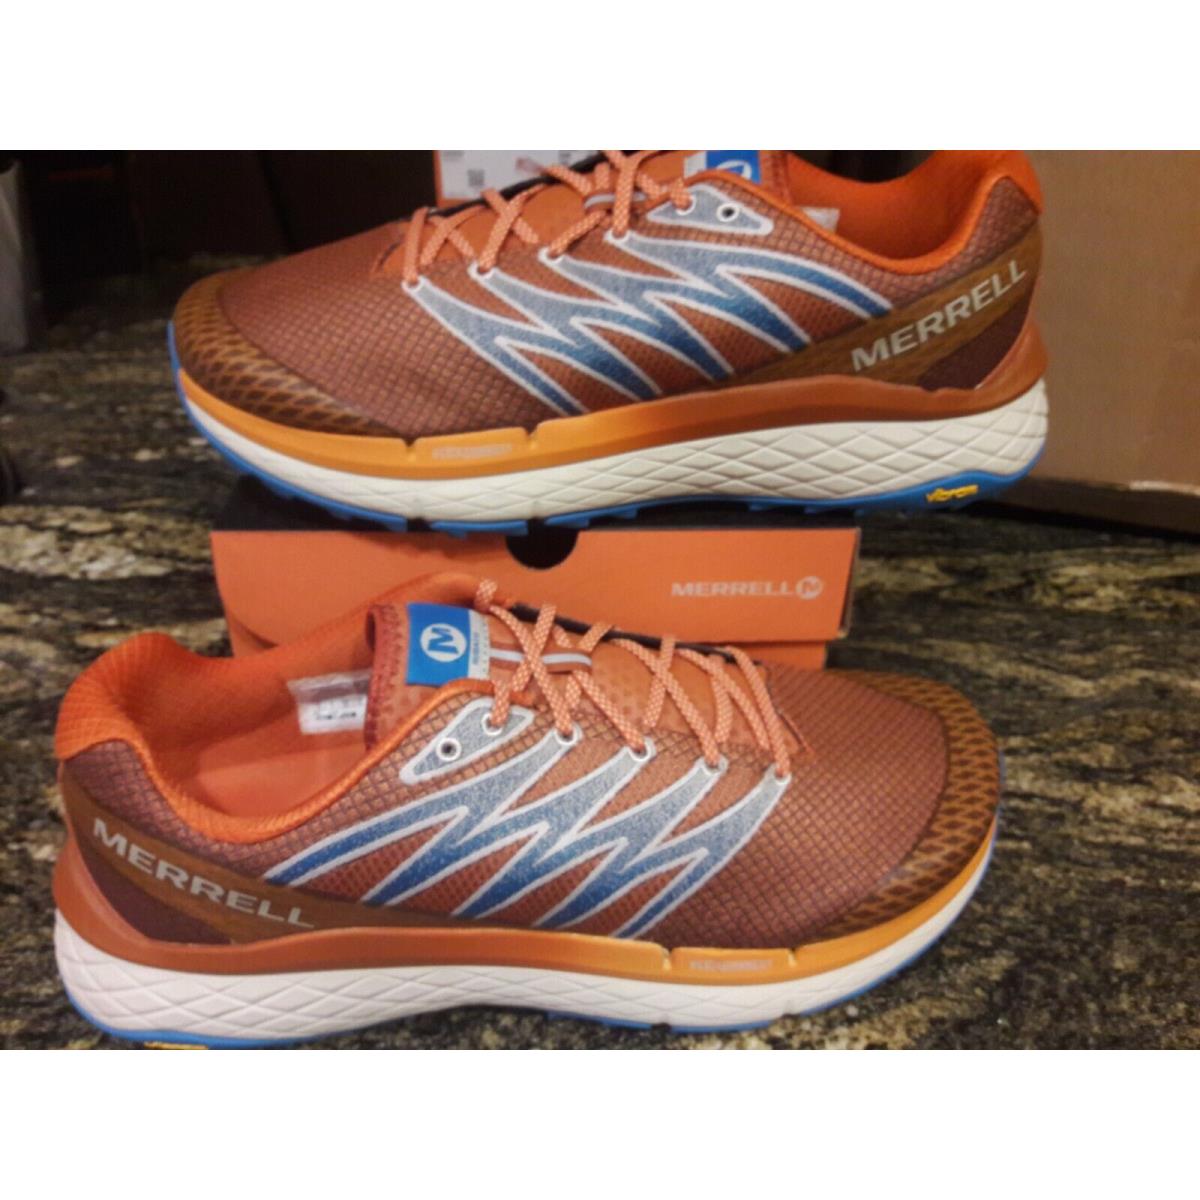 Mens Merrell Rubato Trail Running Shoes Size 15